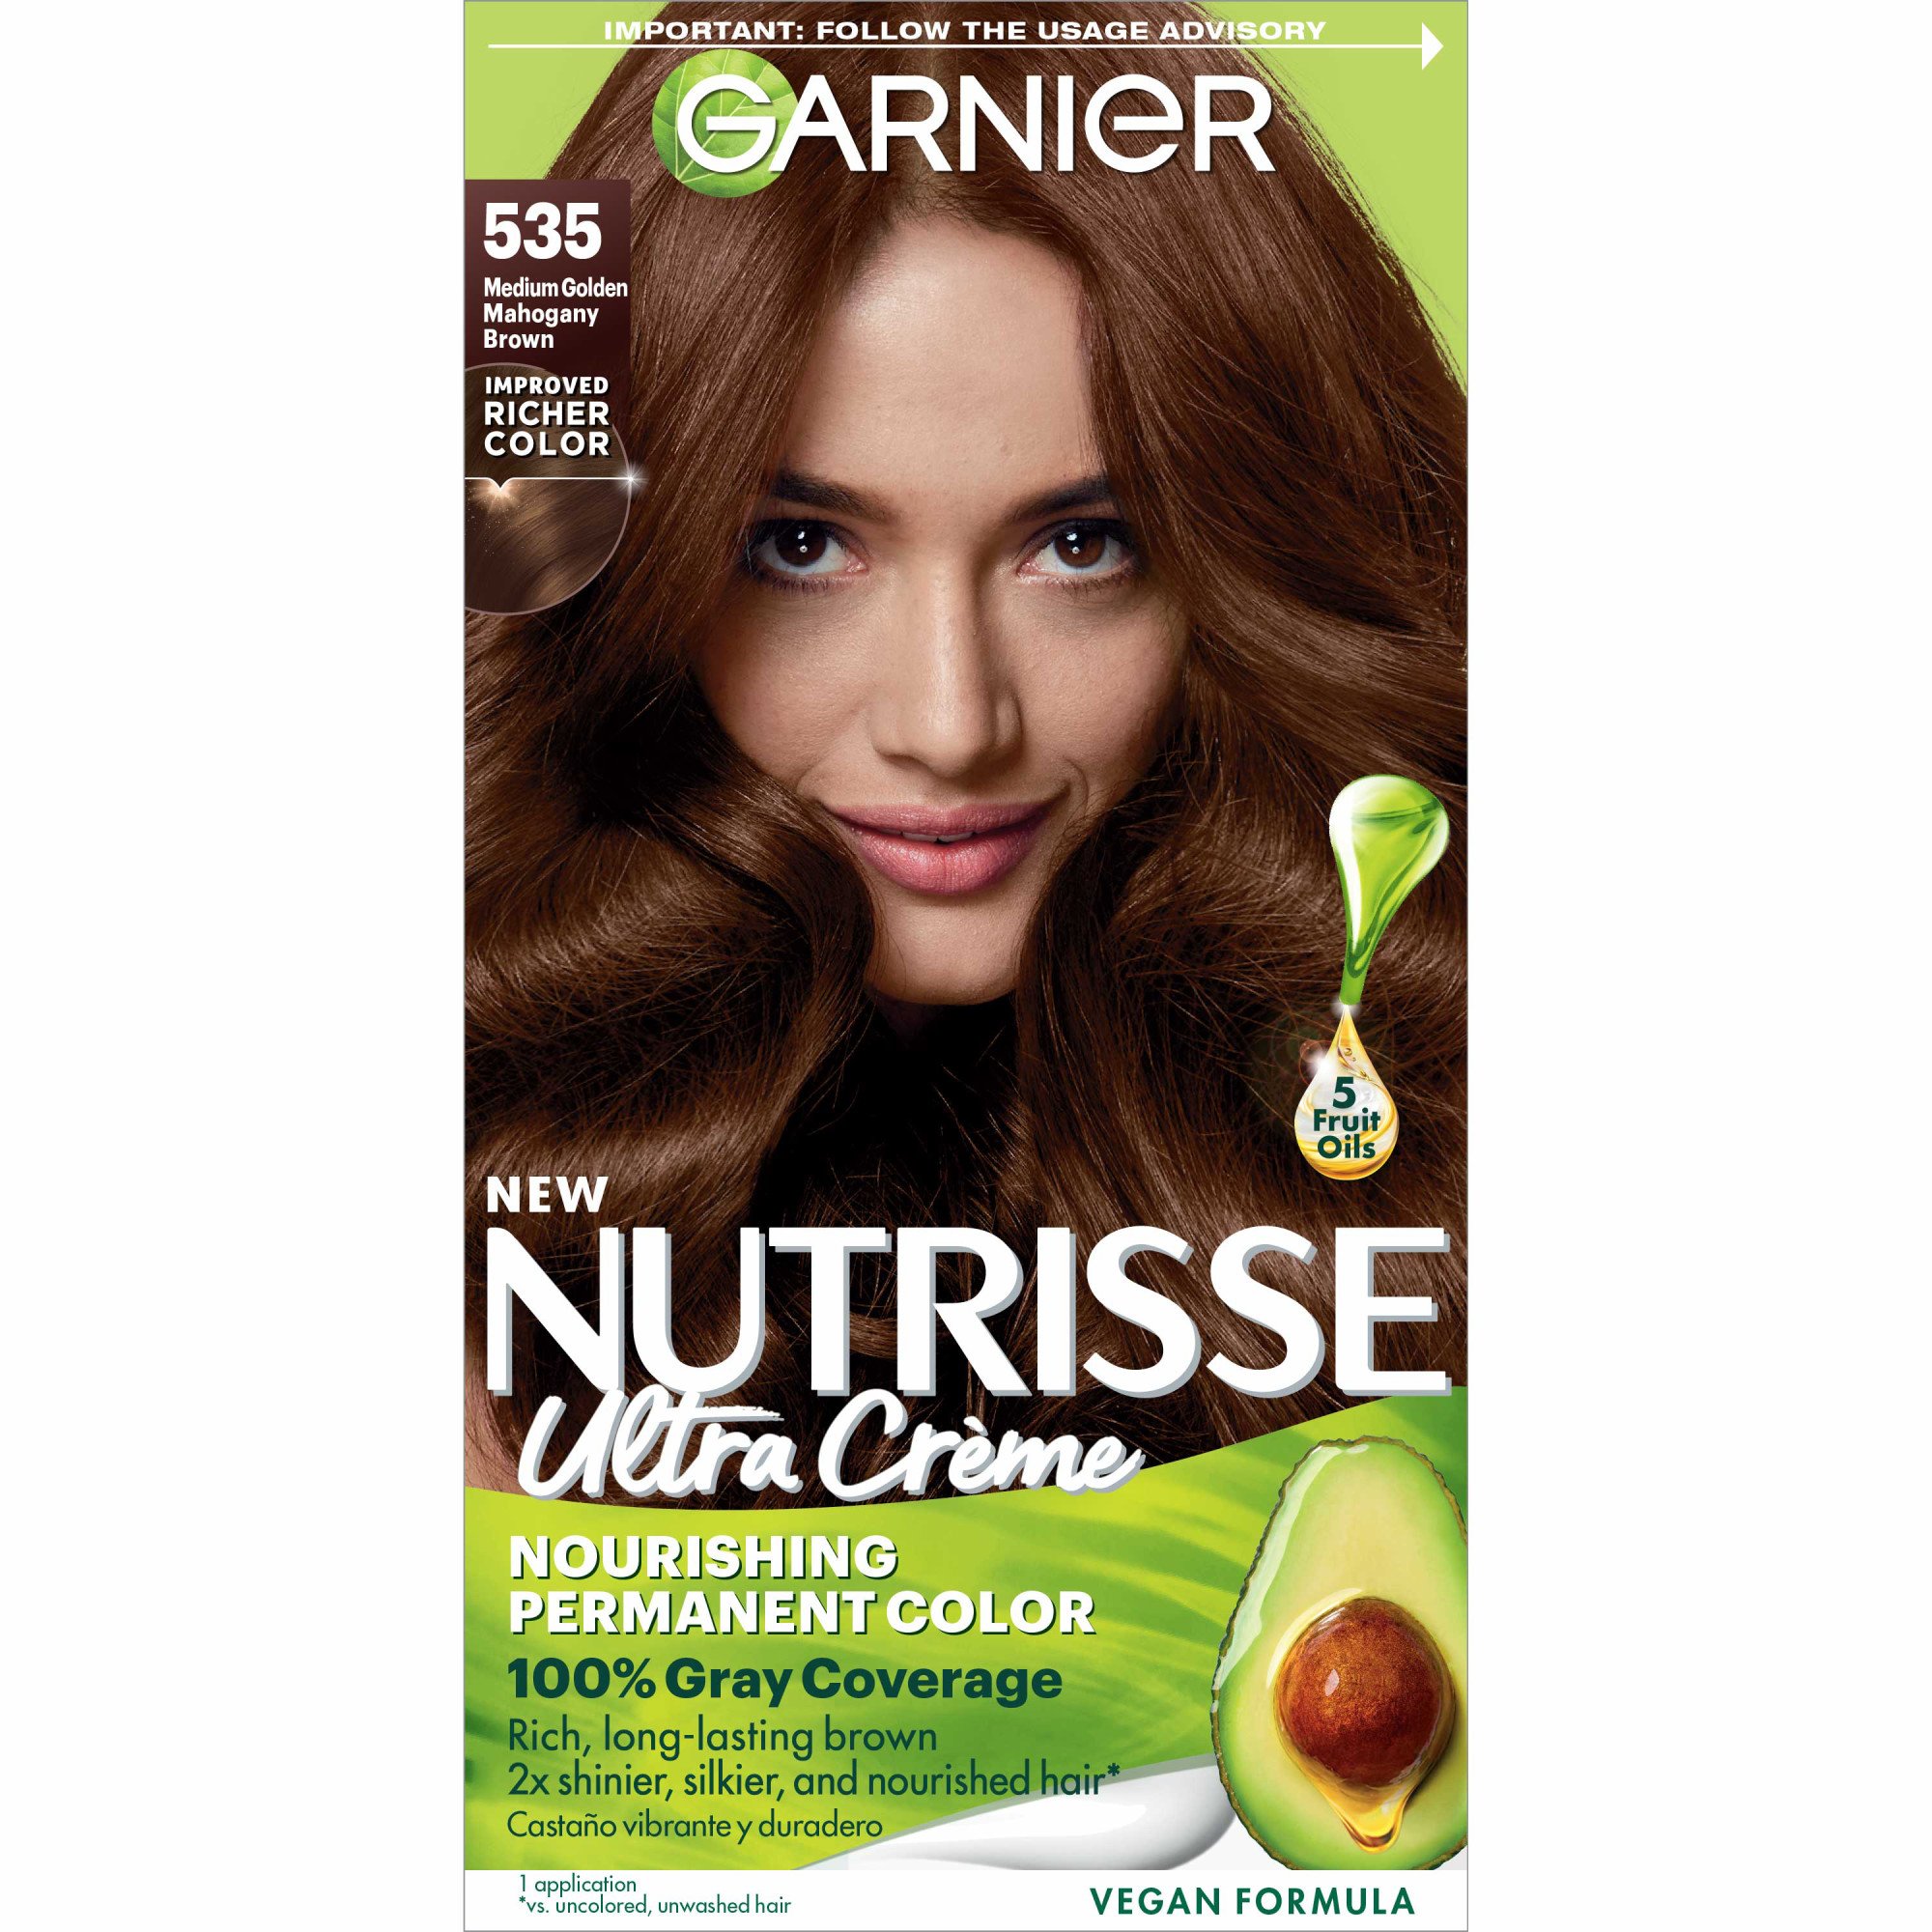 Garnier Nutrisse Nourishing Hair Color Creme - 535 Med Gold Mahogany Brown  (Chocolate Caramel) - Shop Hair Color at H-E-B